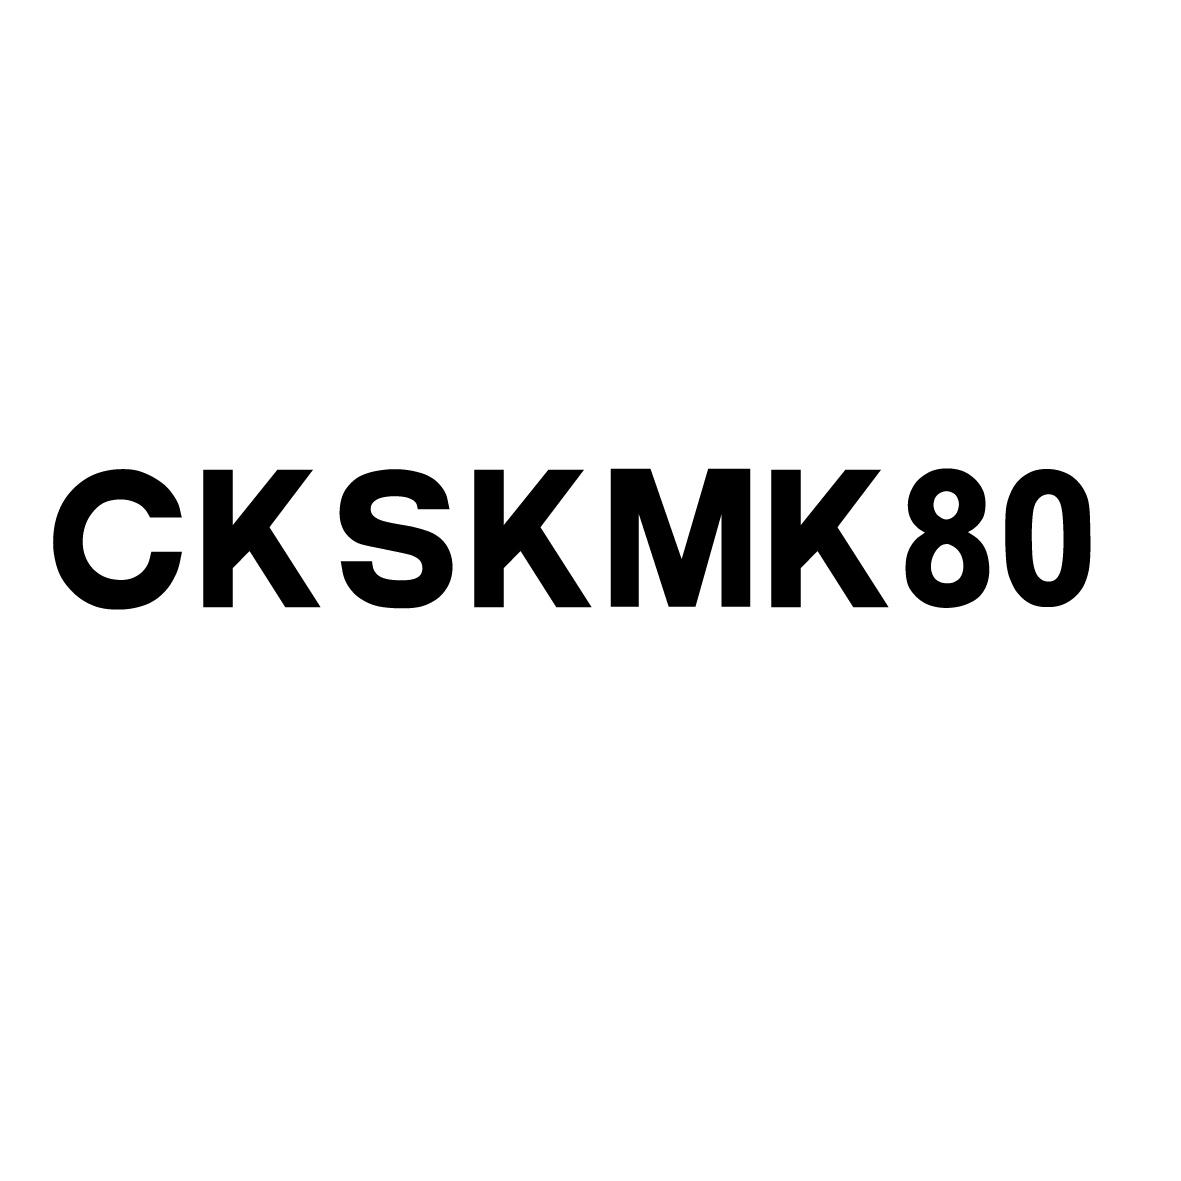 ckskmk 80等待受理通知书发文